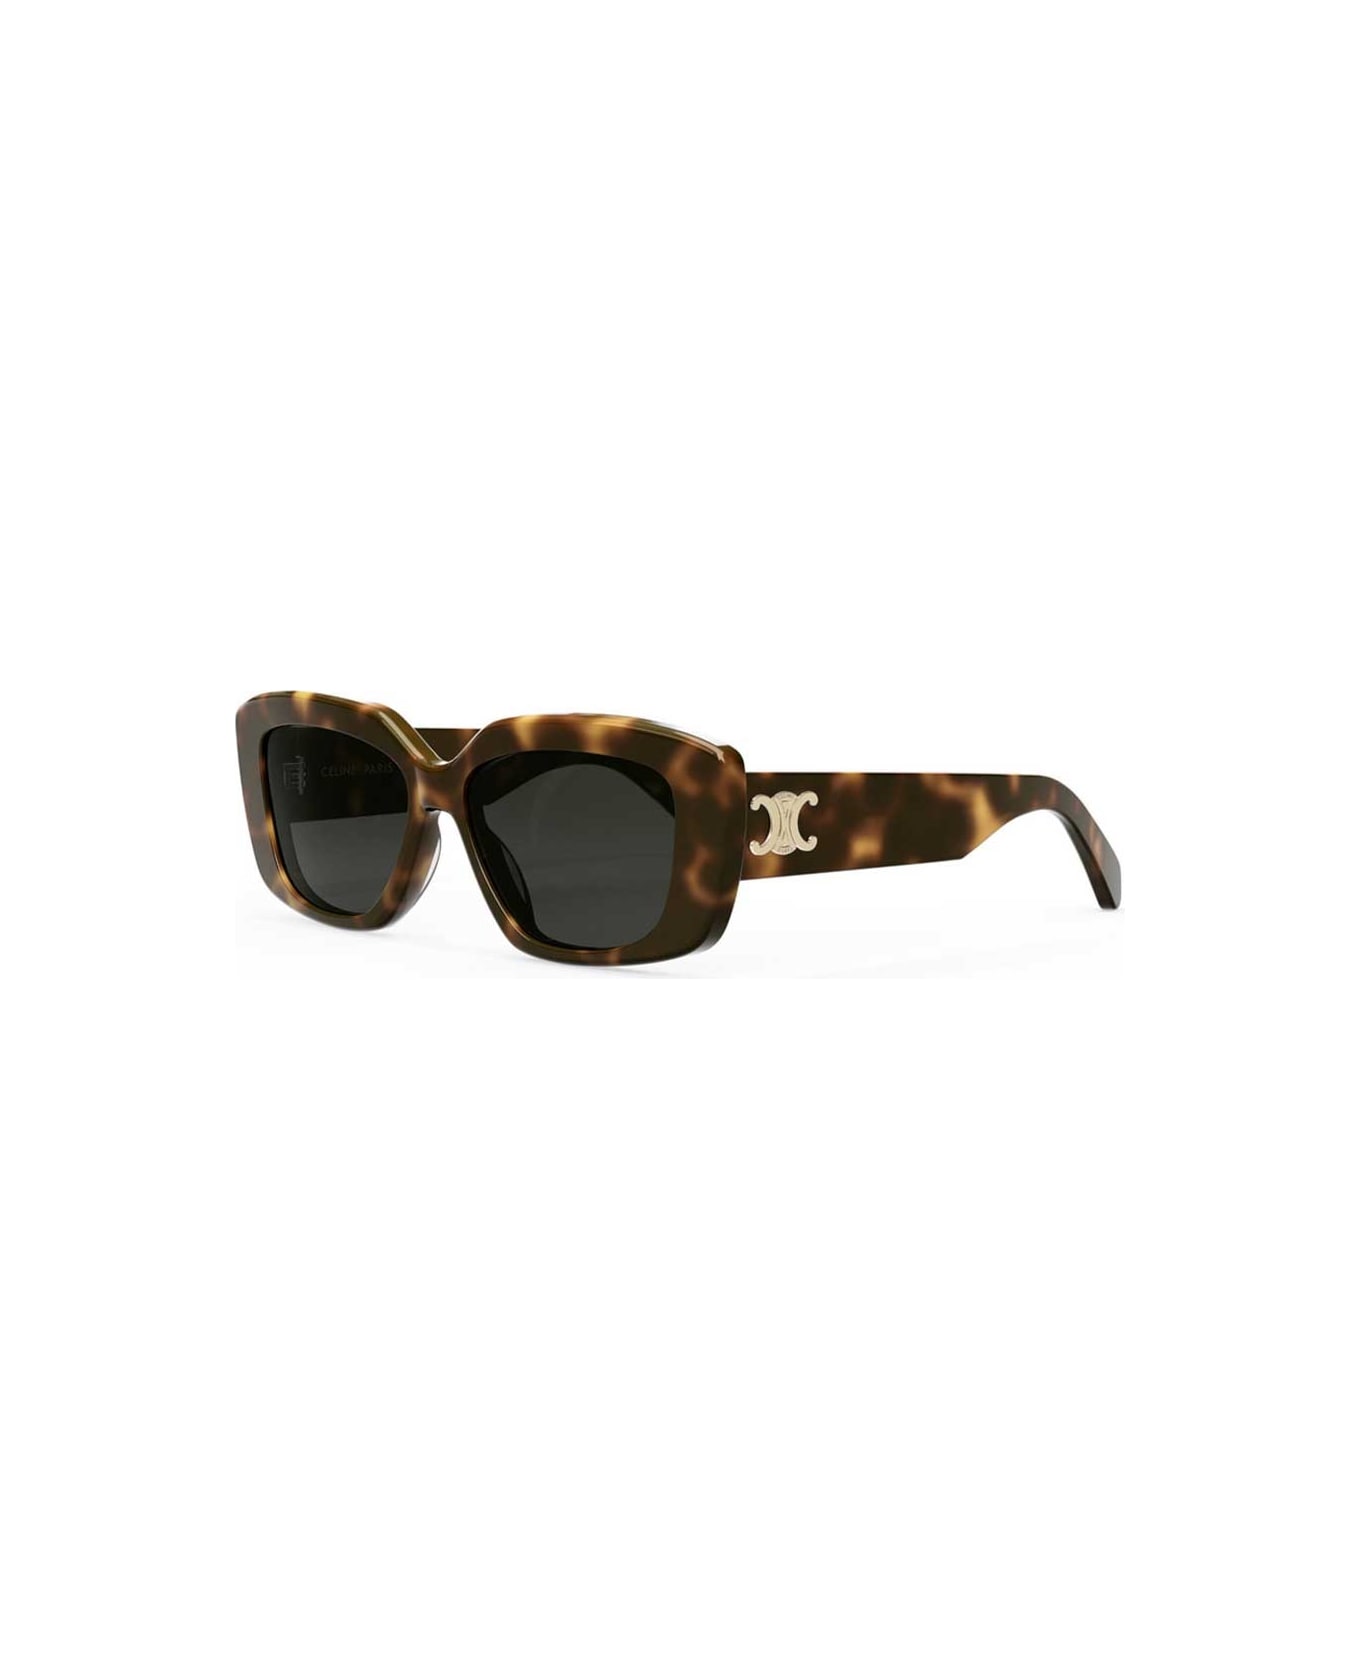 Celine Rectangle Sunglasses - Marrone/Grigio